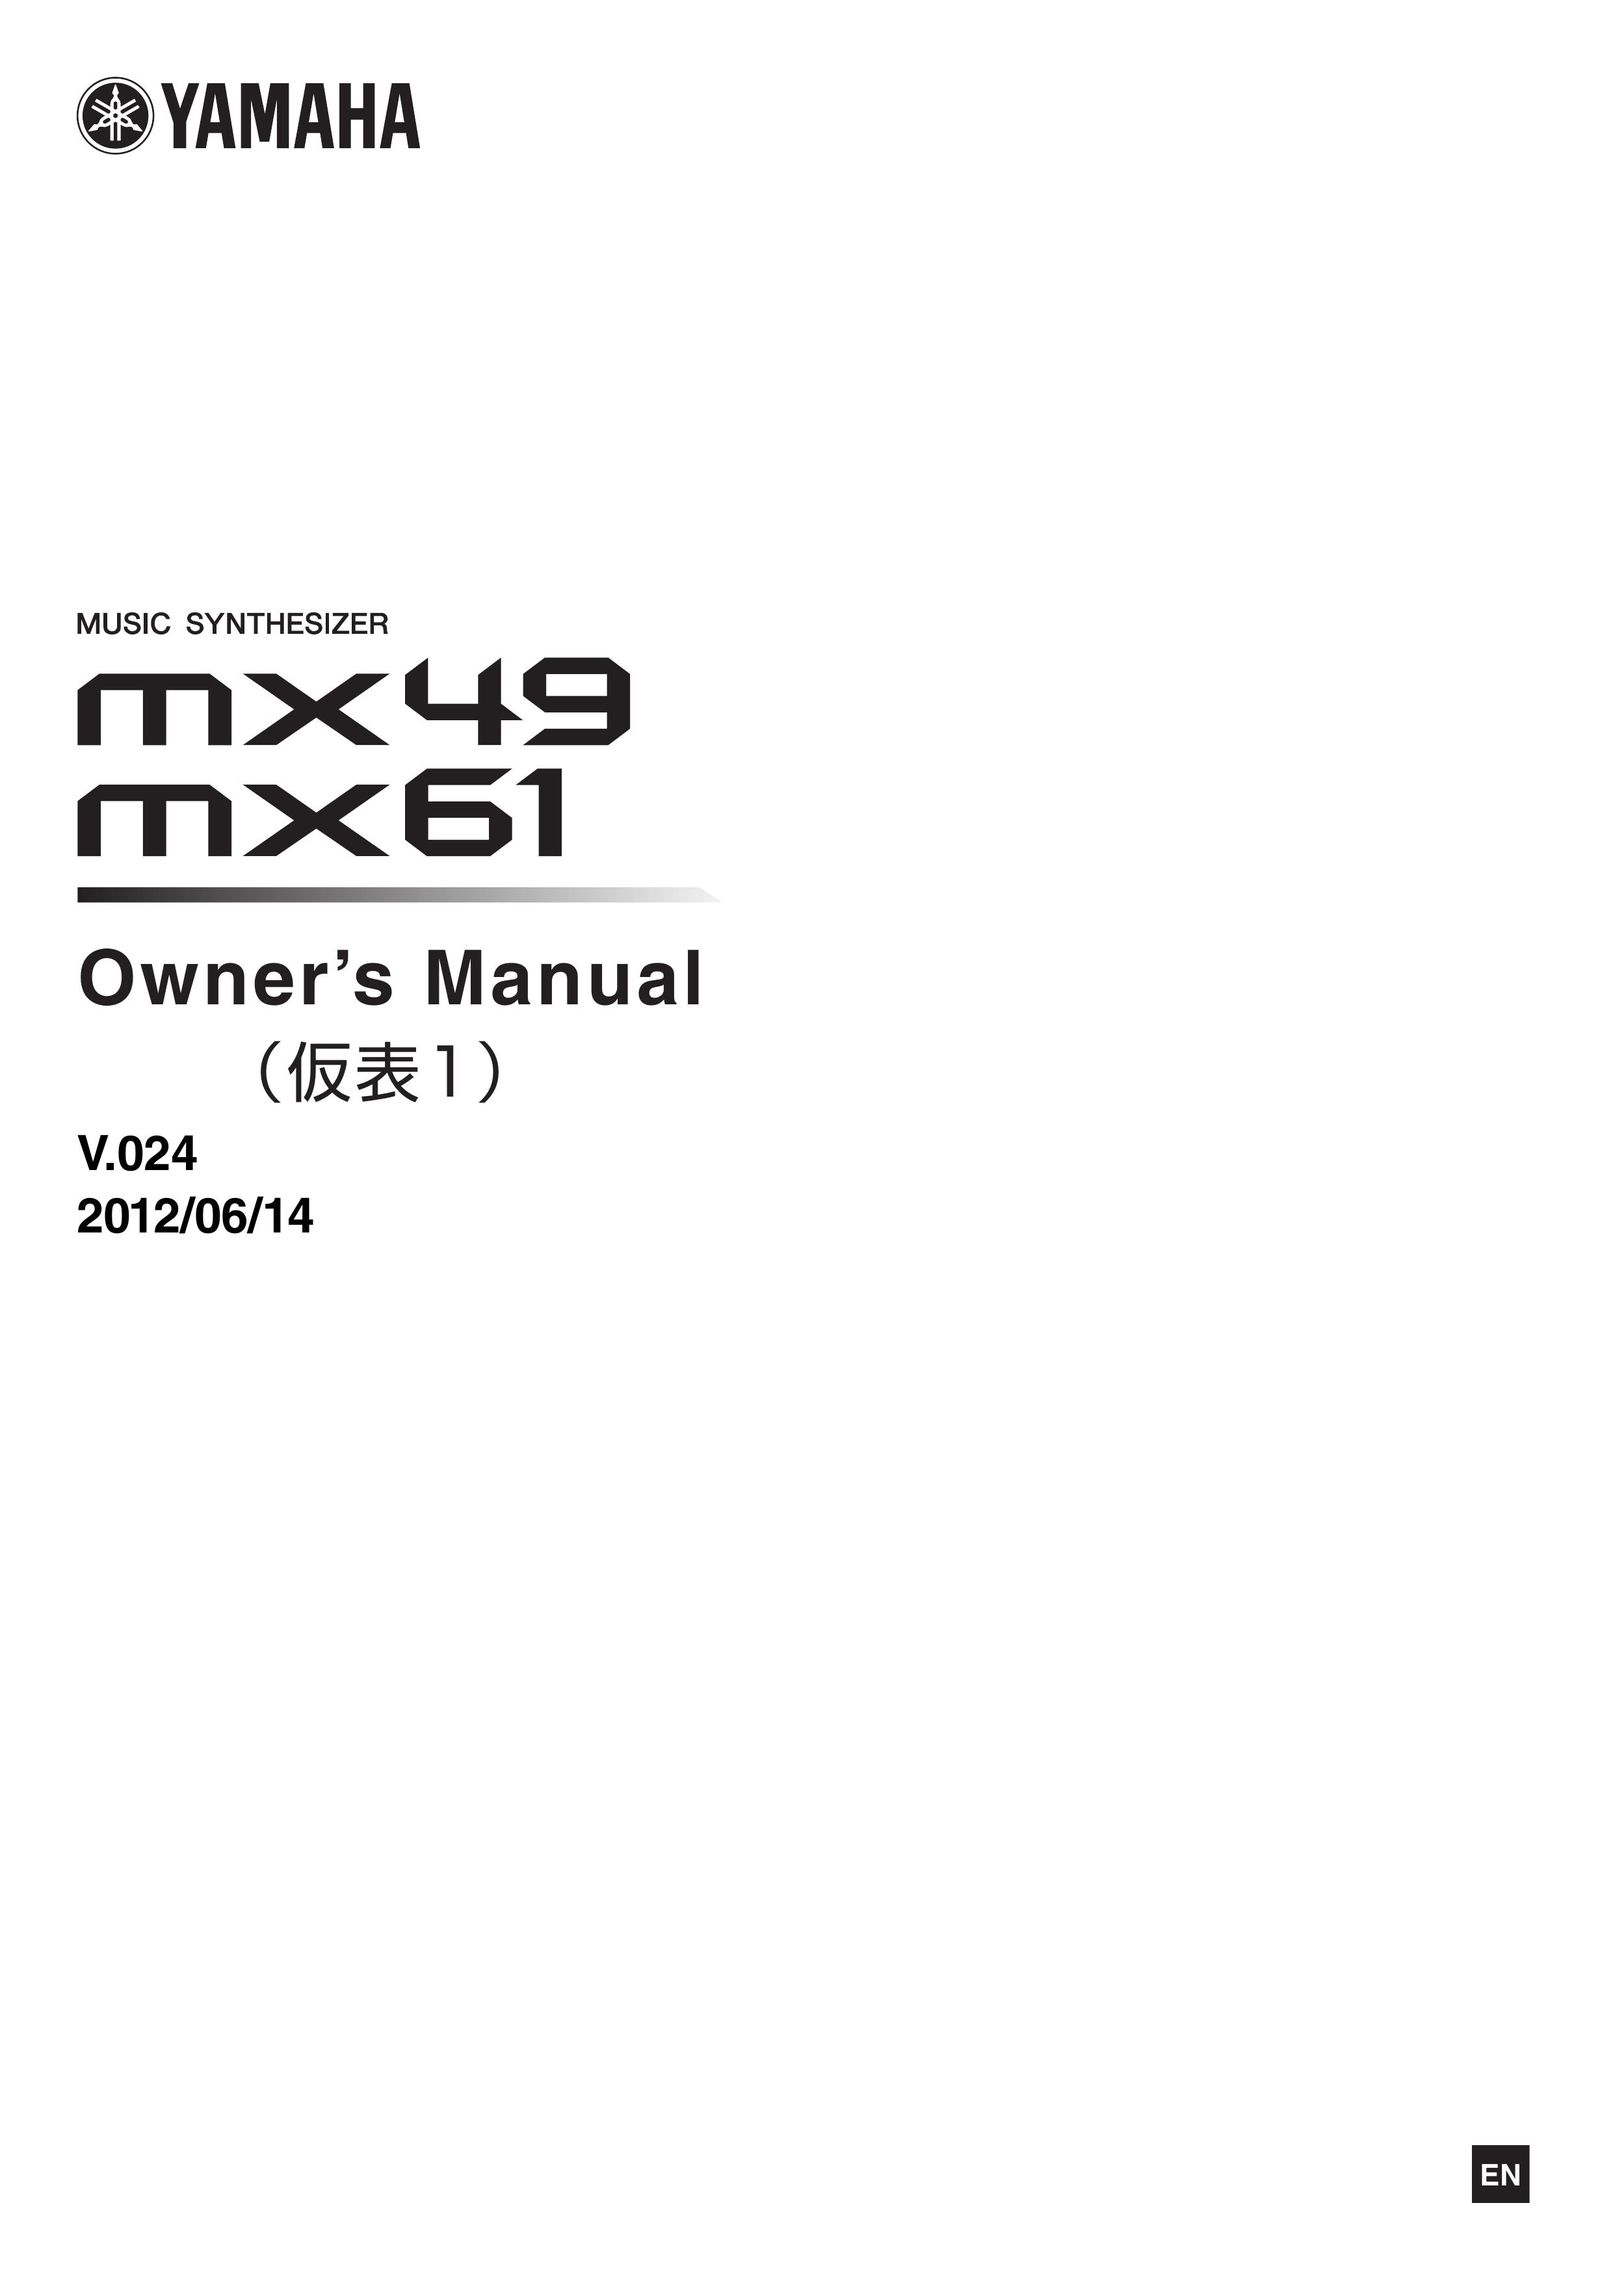 Yamaha MX-61 Musical Toy Instrument User Manual